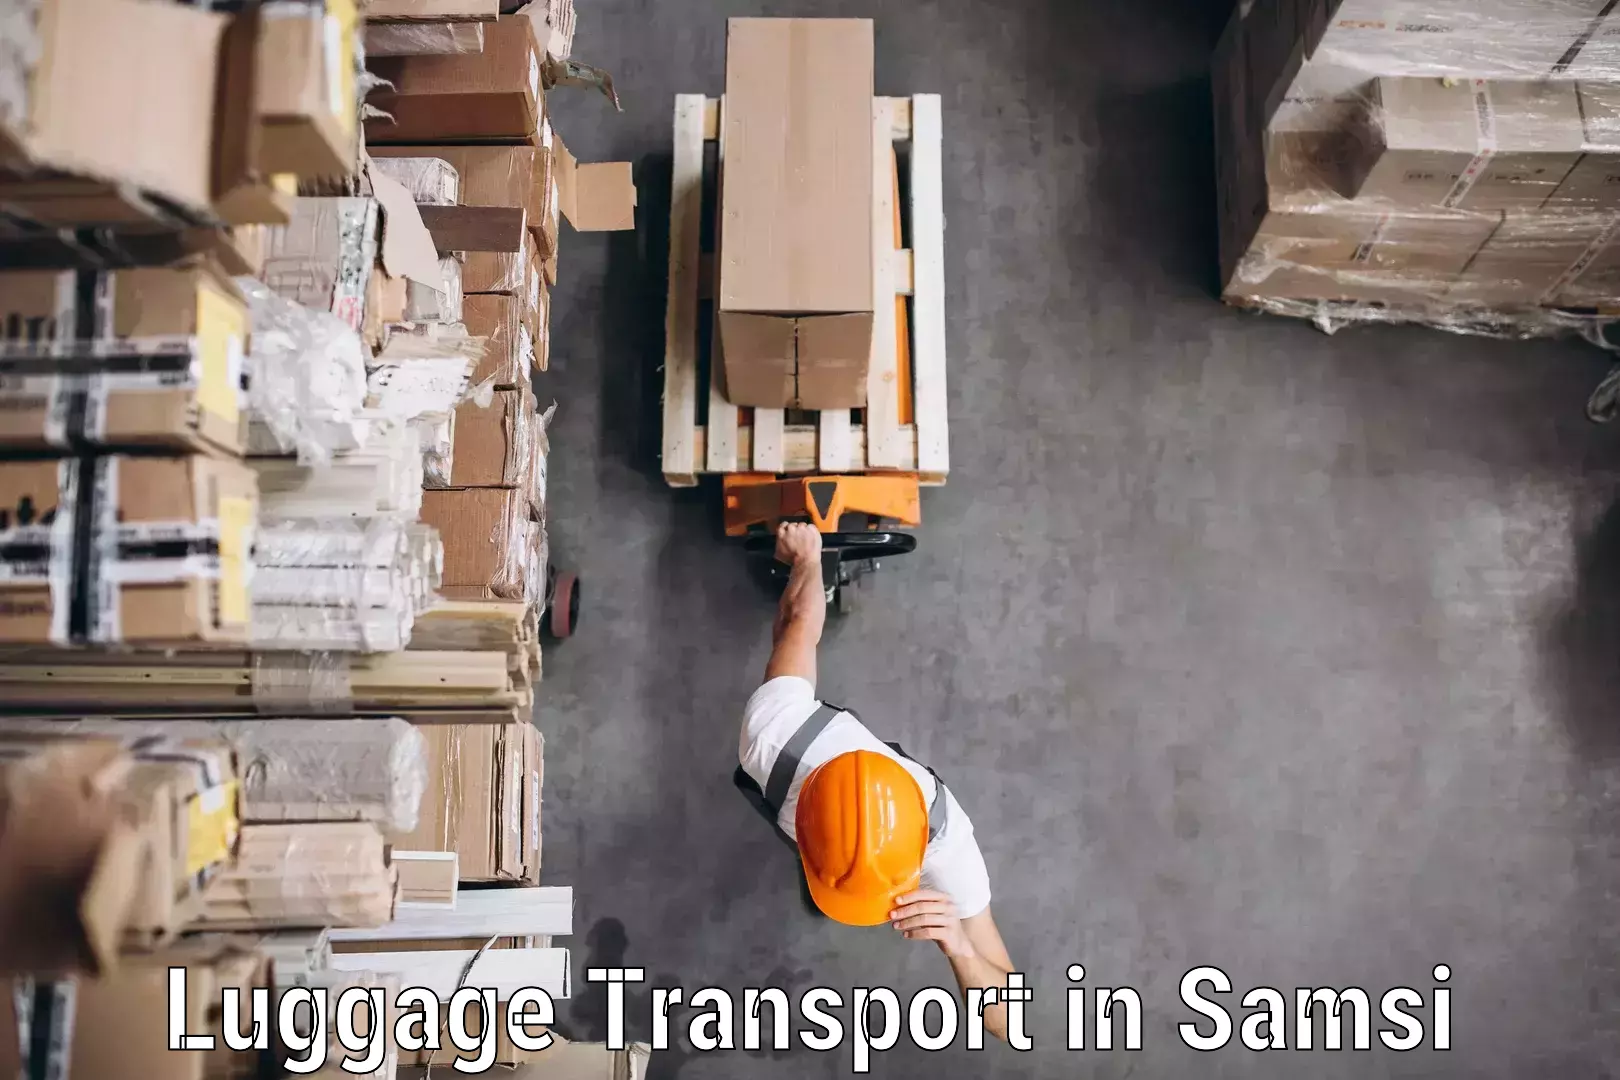 Luggage transfer service in Samsi